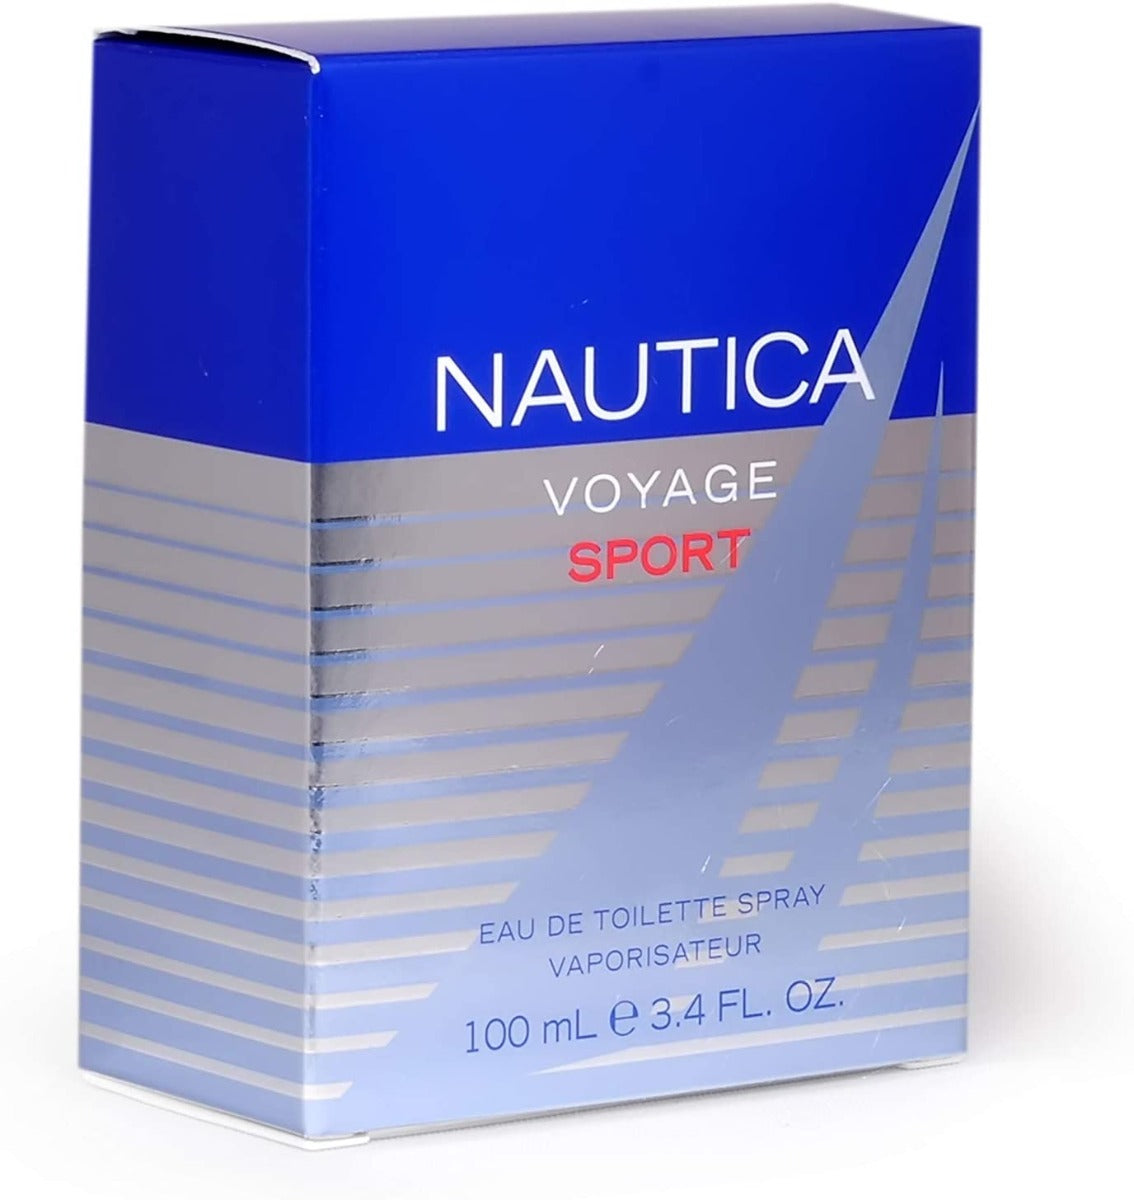 NAUTICA VOYAGE SPORT - PERFUME FOR MEN - EDT 100 ml - samawa perfumes 